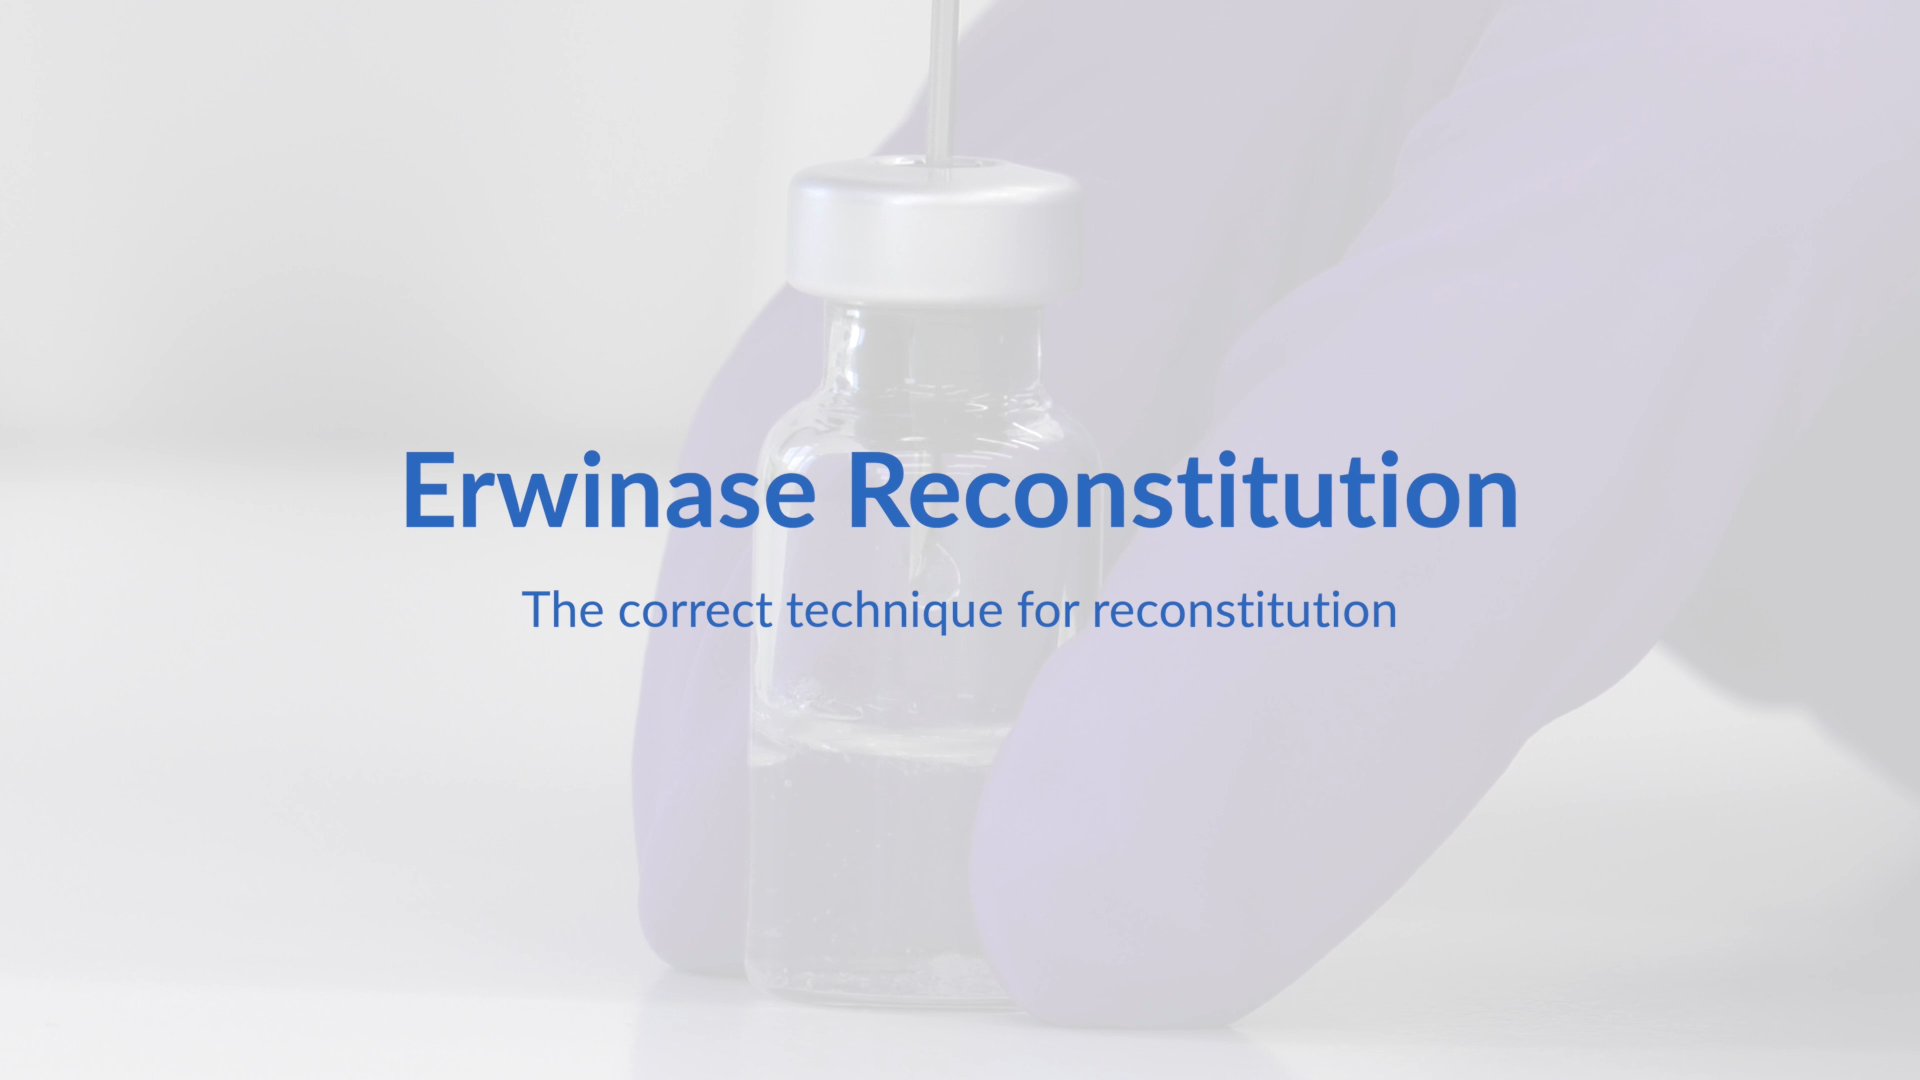 Erwinase Reconstitution Video